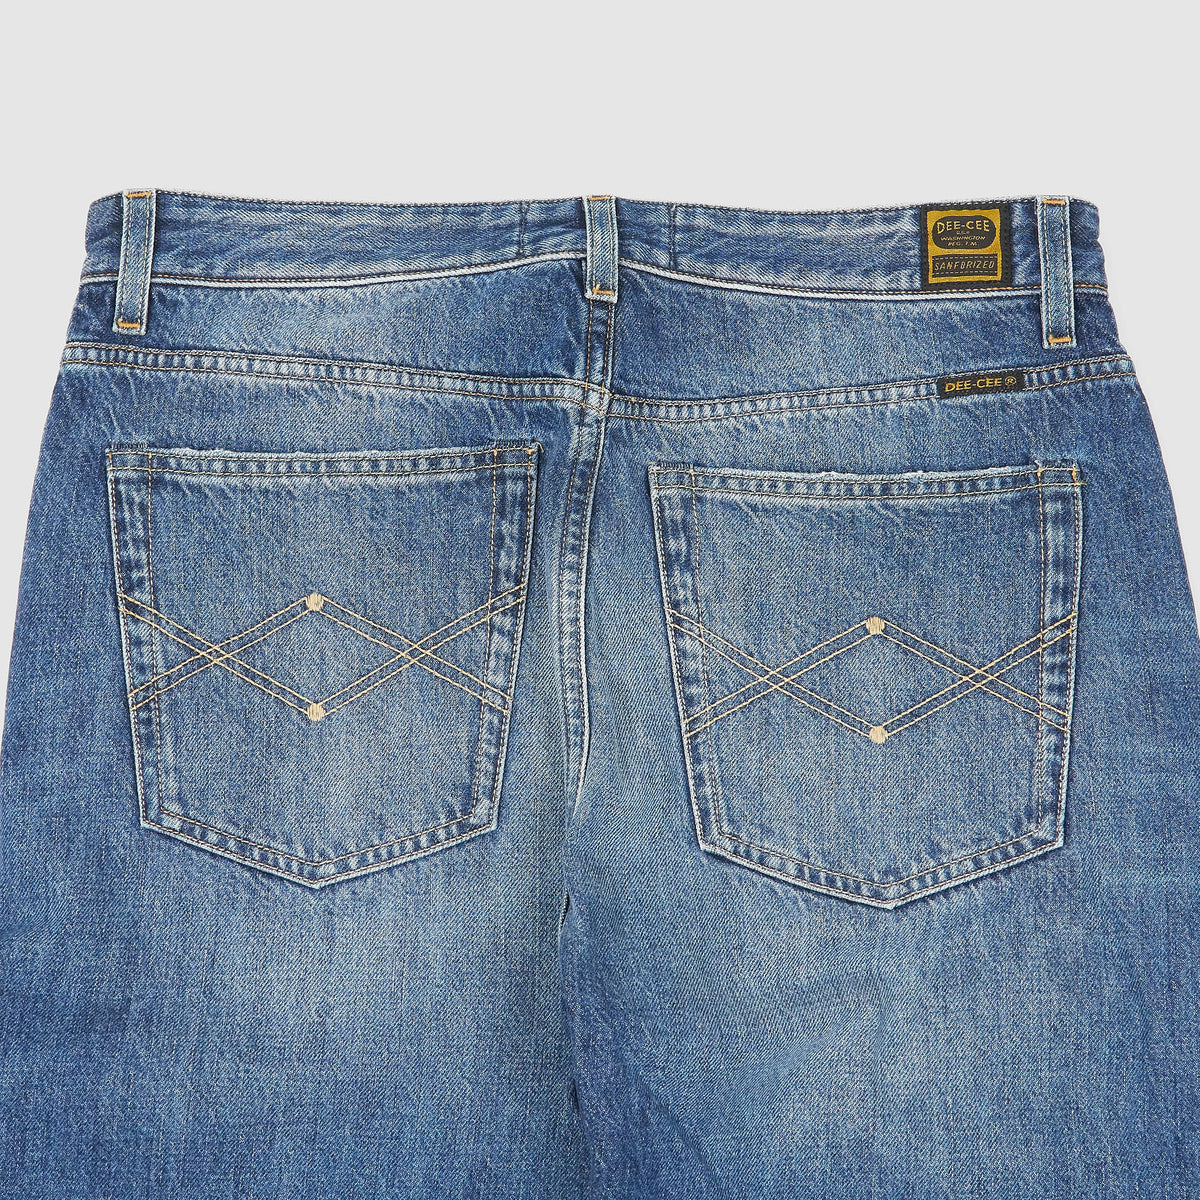 Washington Dee-Cee Ladies 5-Pocket Ranch Jeans